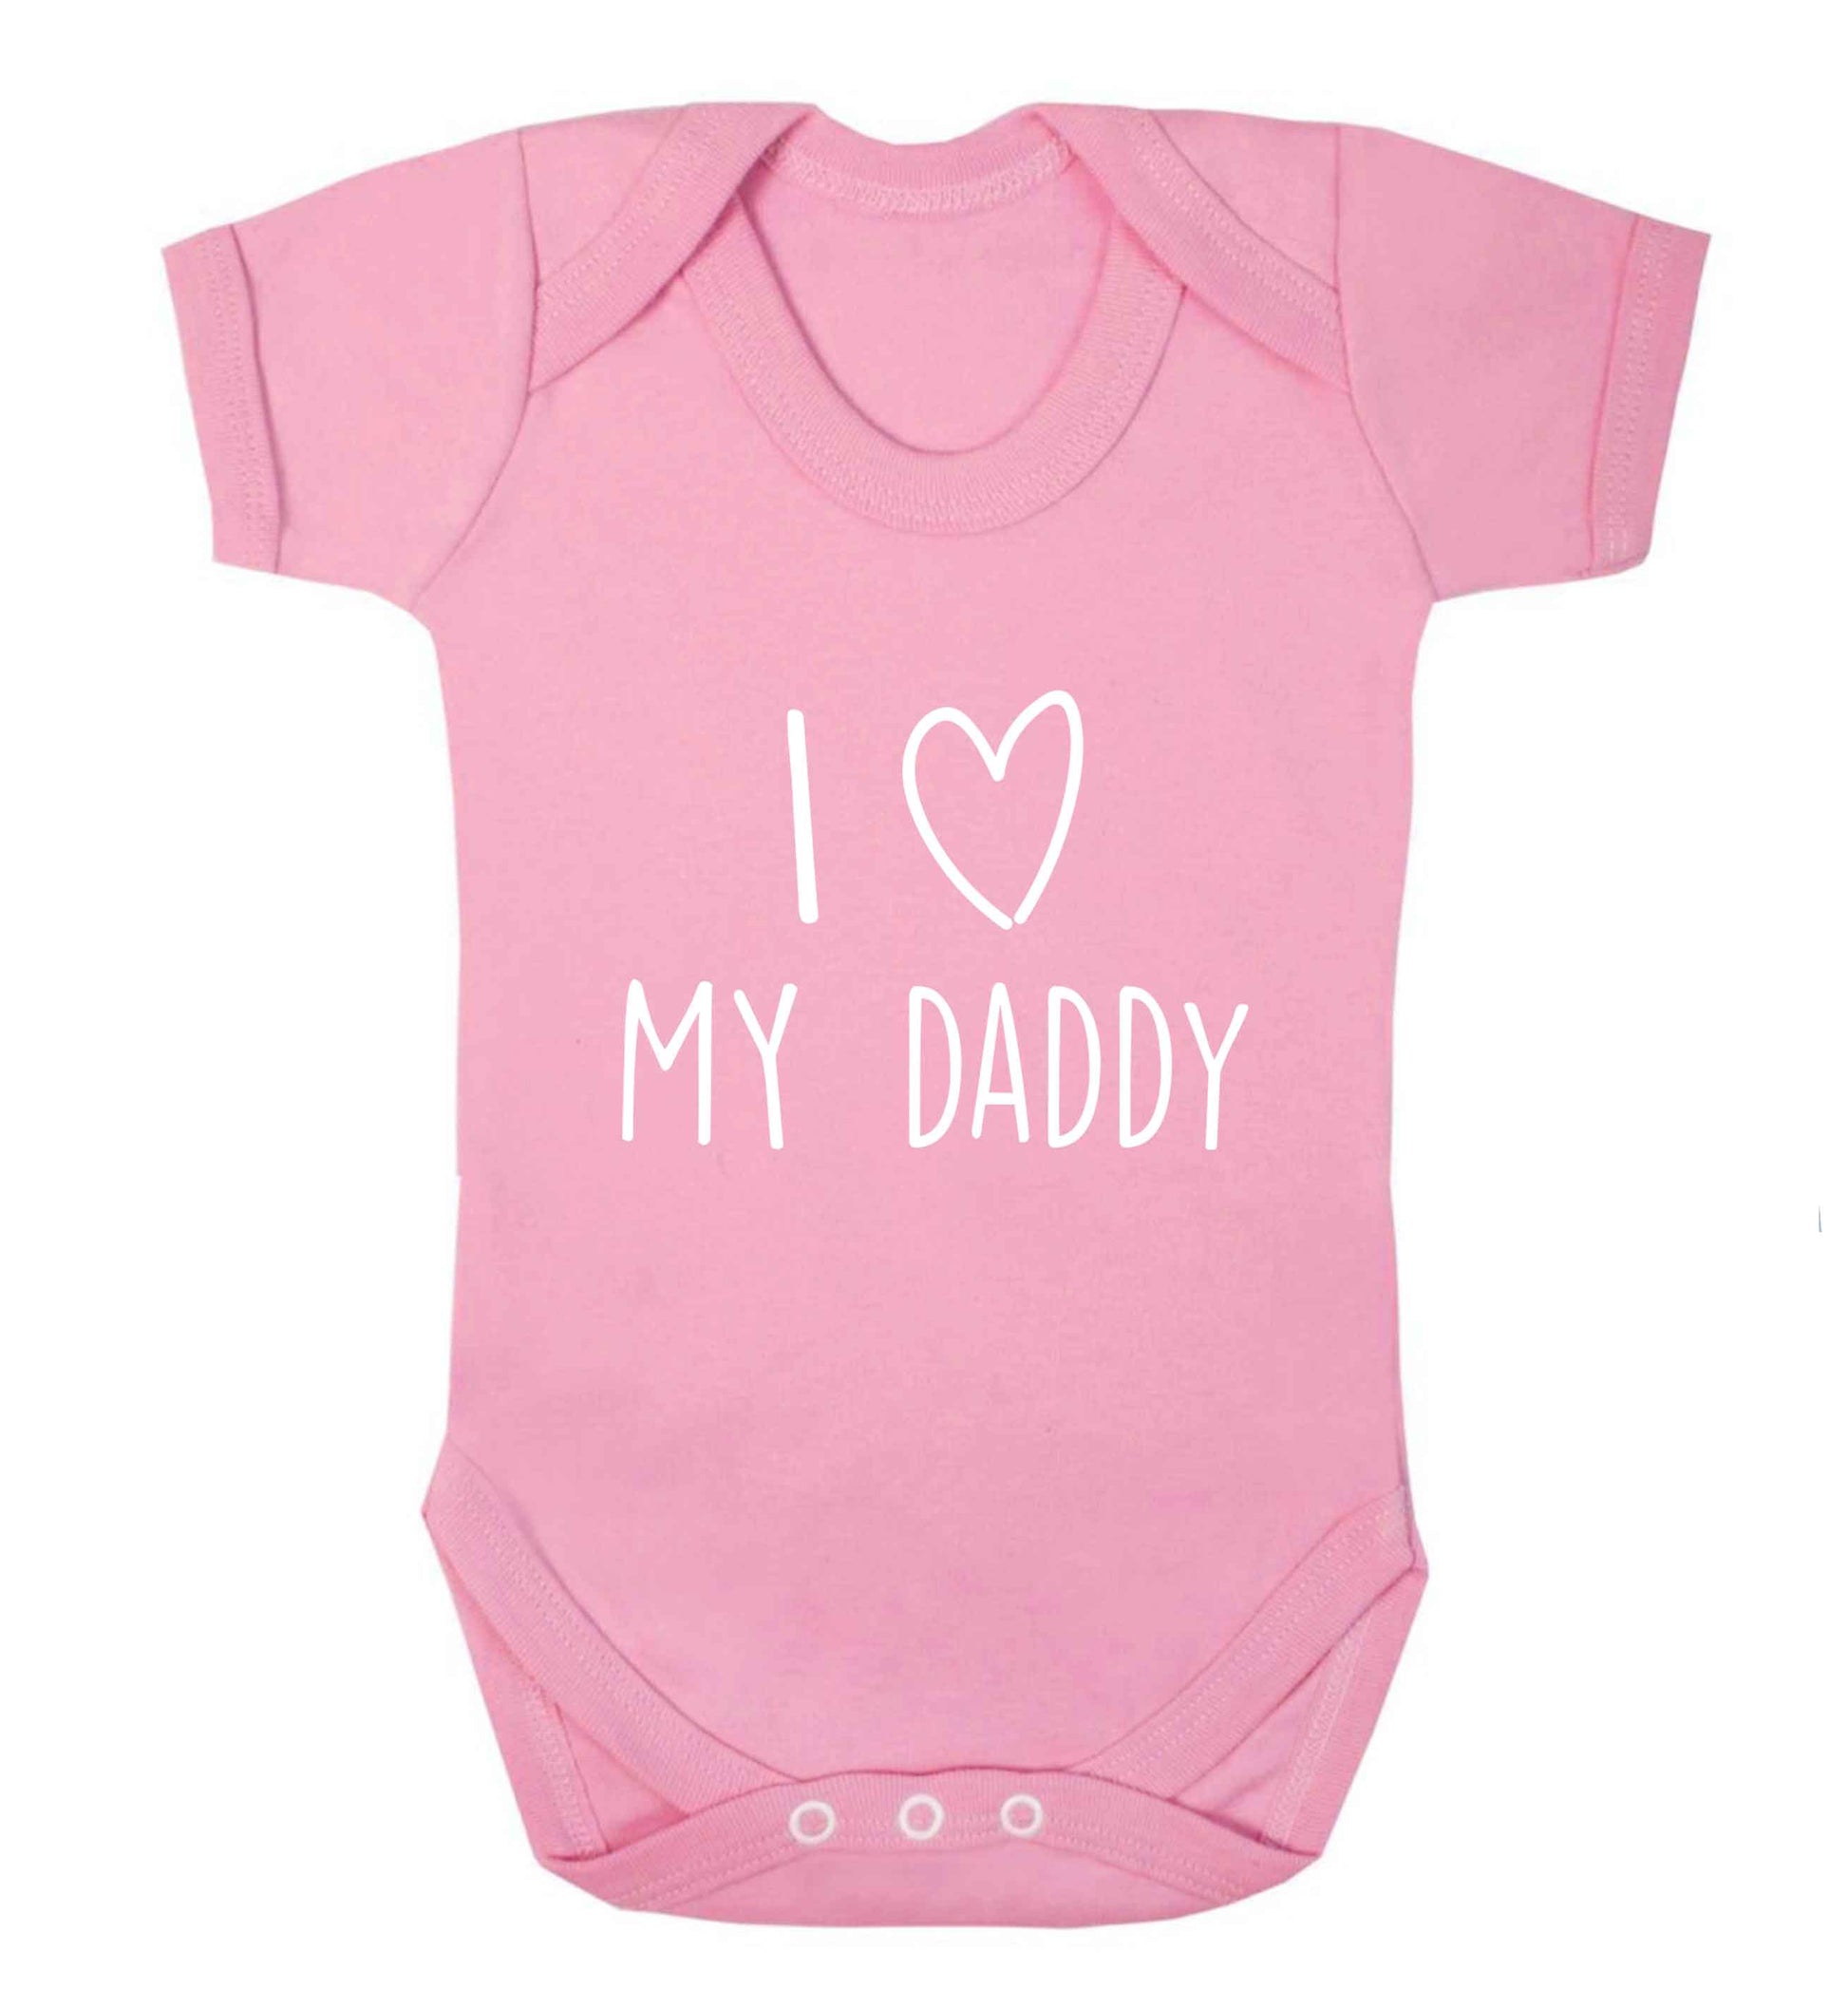 I love my daddy baby vest pale pink 18-24 months